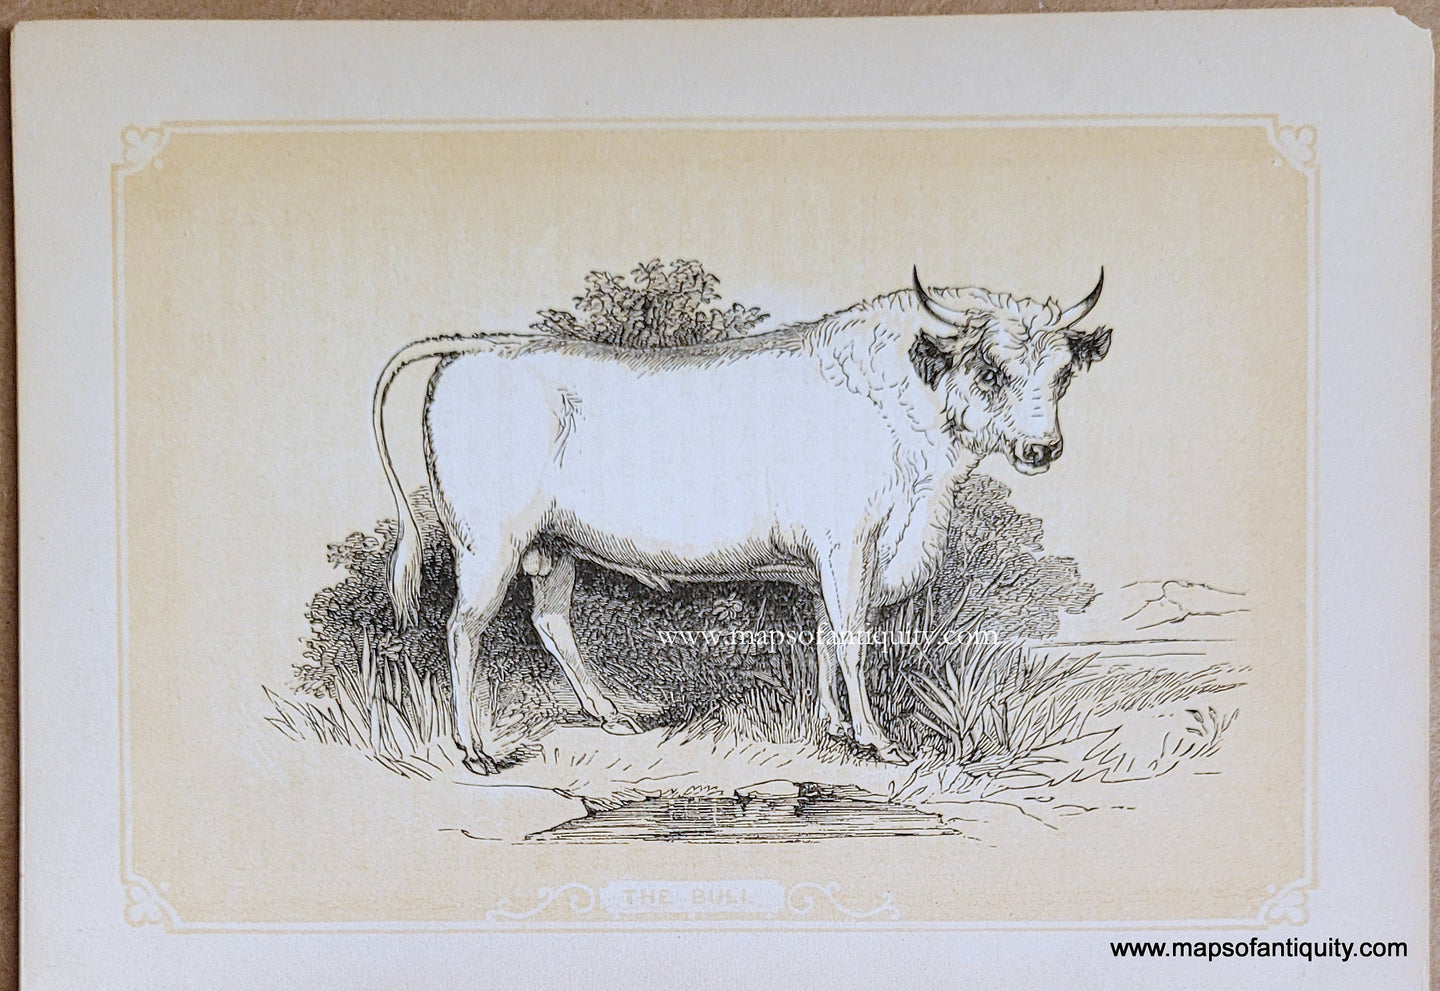 Genuine-Antique-Print-The-Bull-1850s-Tallis-Maps-Of-Antiquity